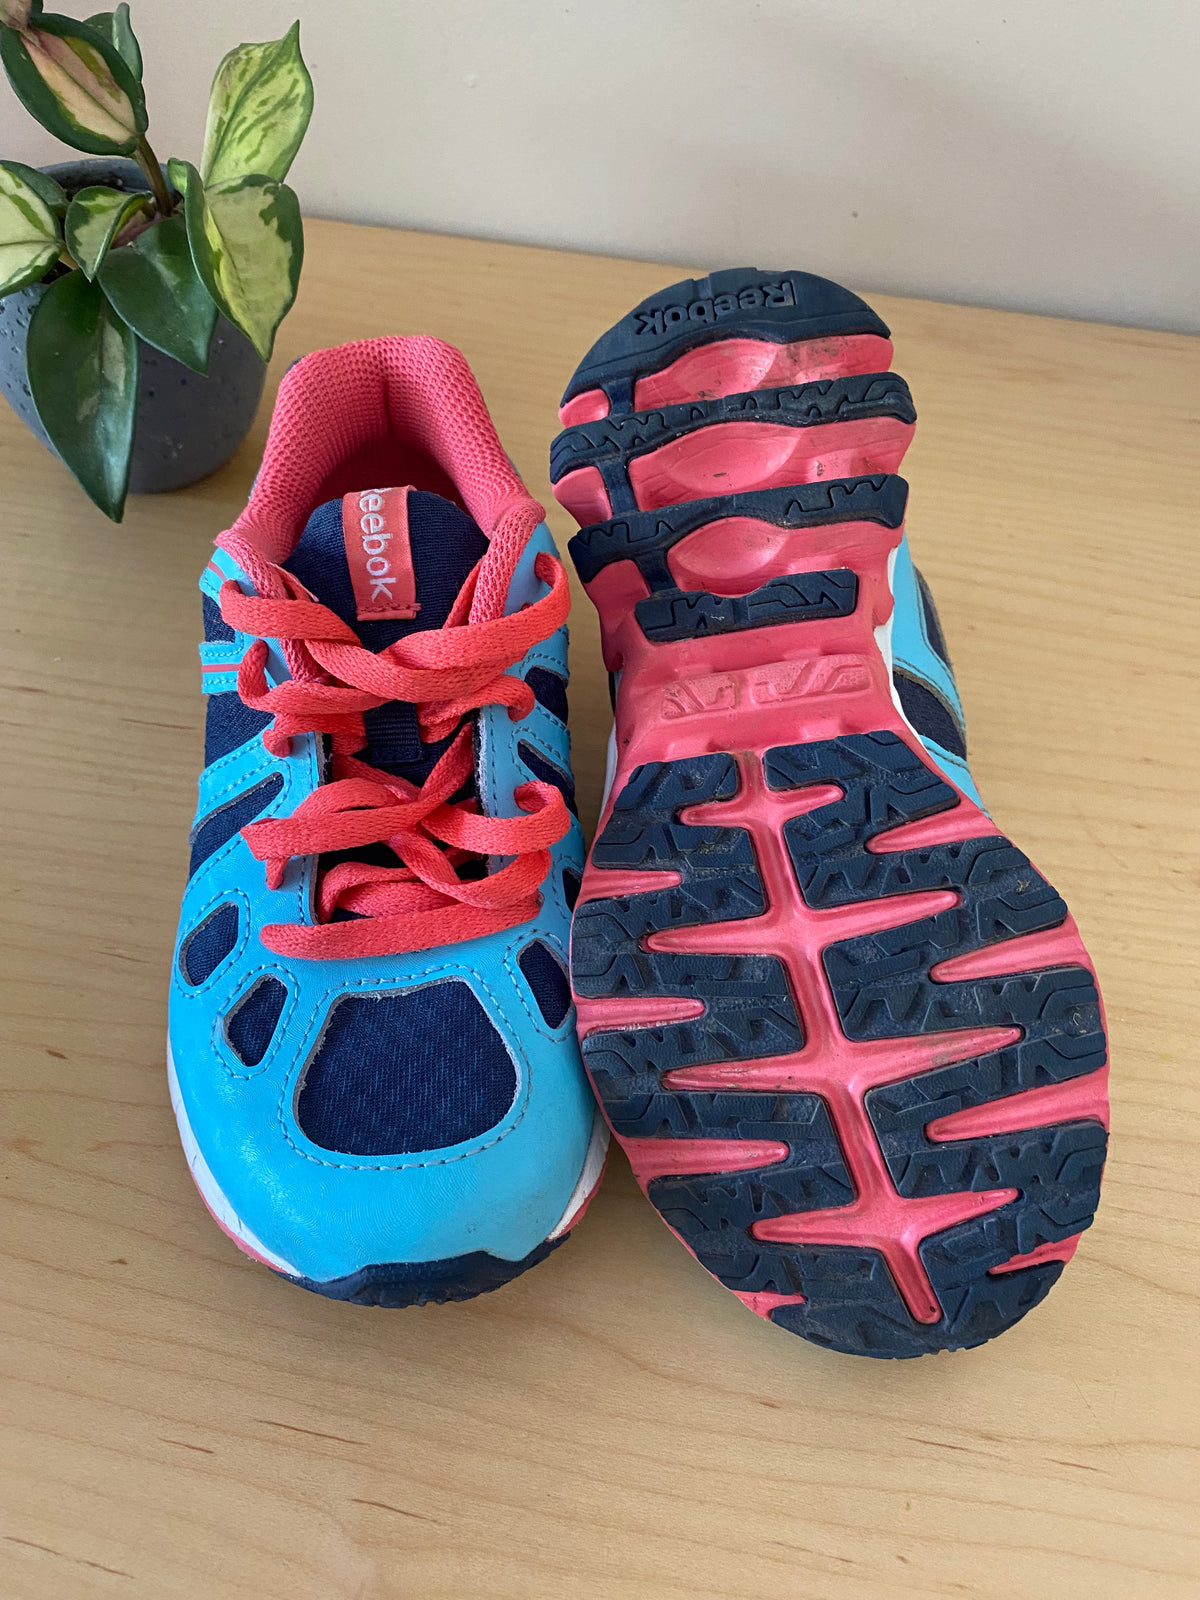 Running Shoes (Toddler Girls Size 11)